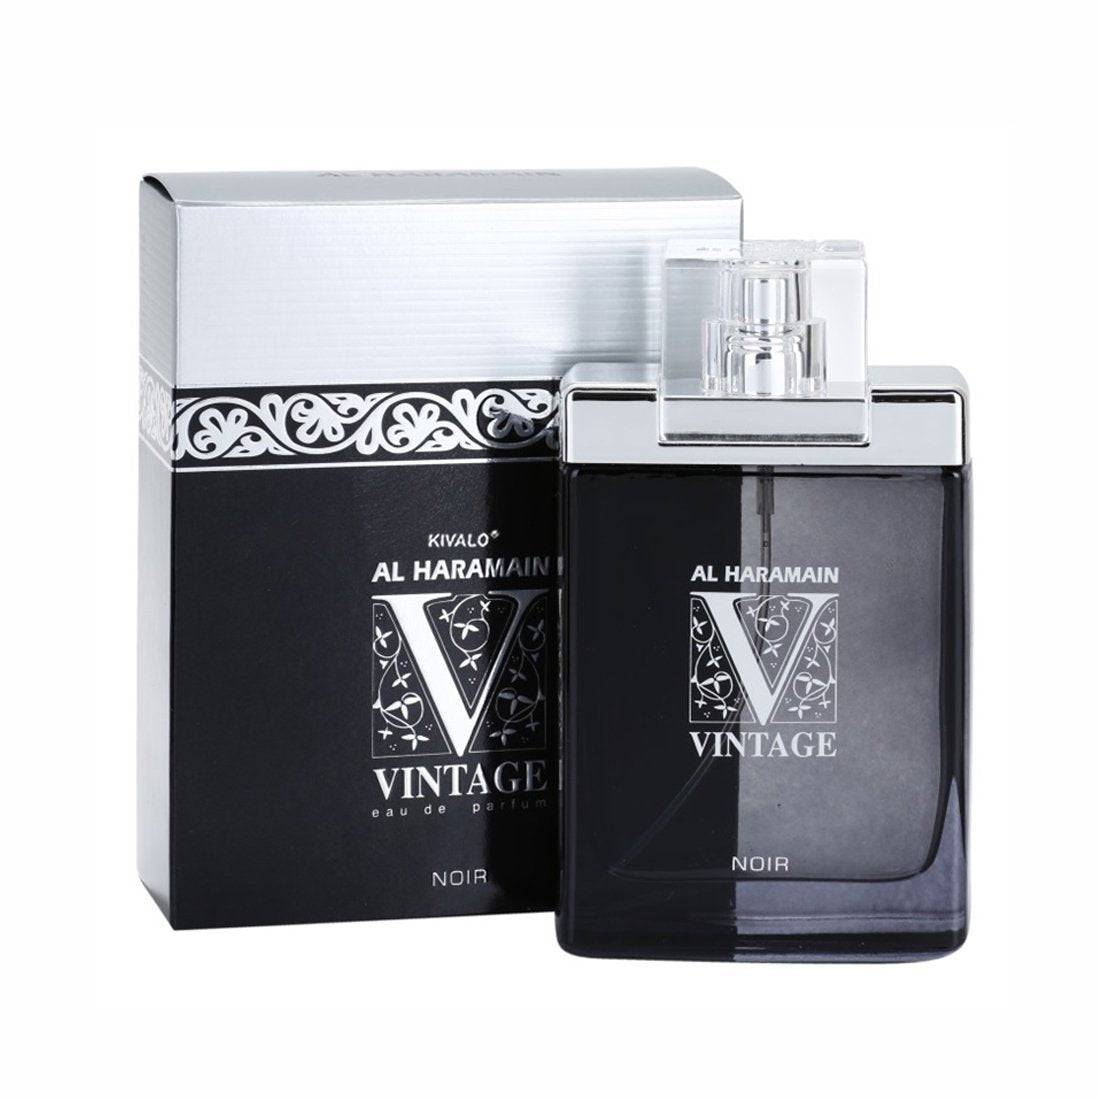 Al Haramain Vintage Noir Perfume for Unisex 100ml - samawa perfumes 